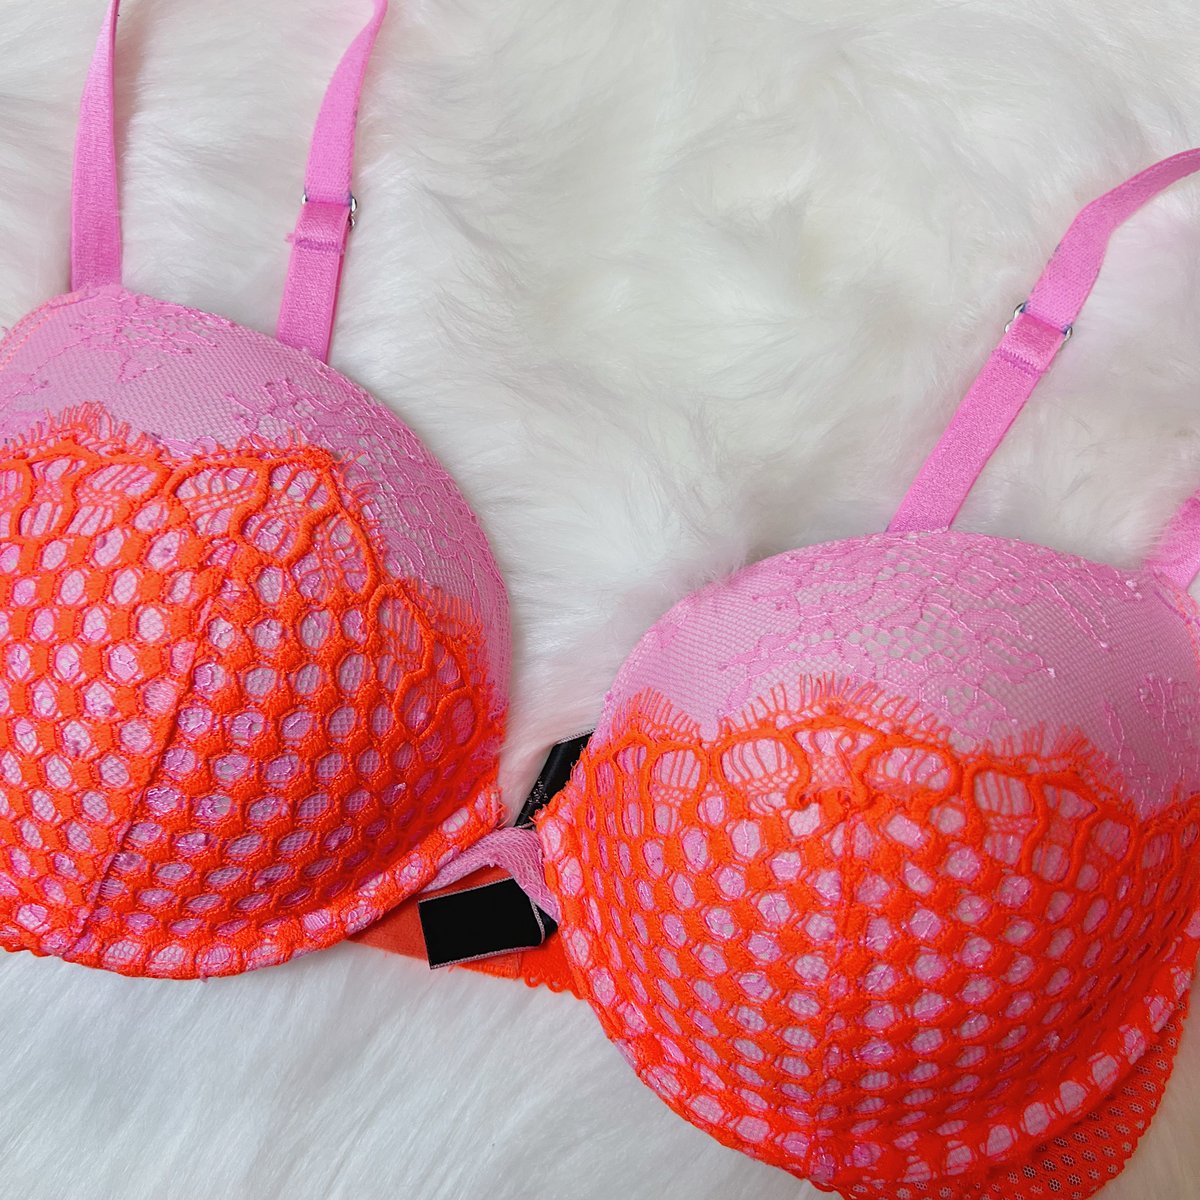 36C VS Victoria's Secret gel filled push up bra